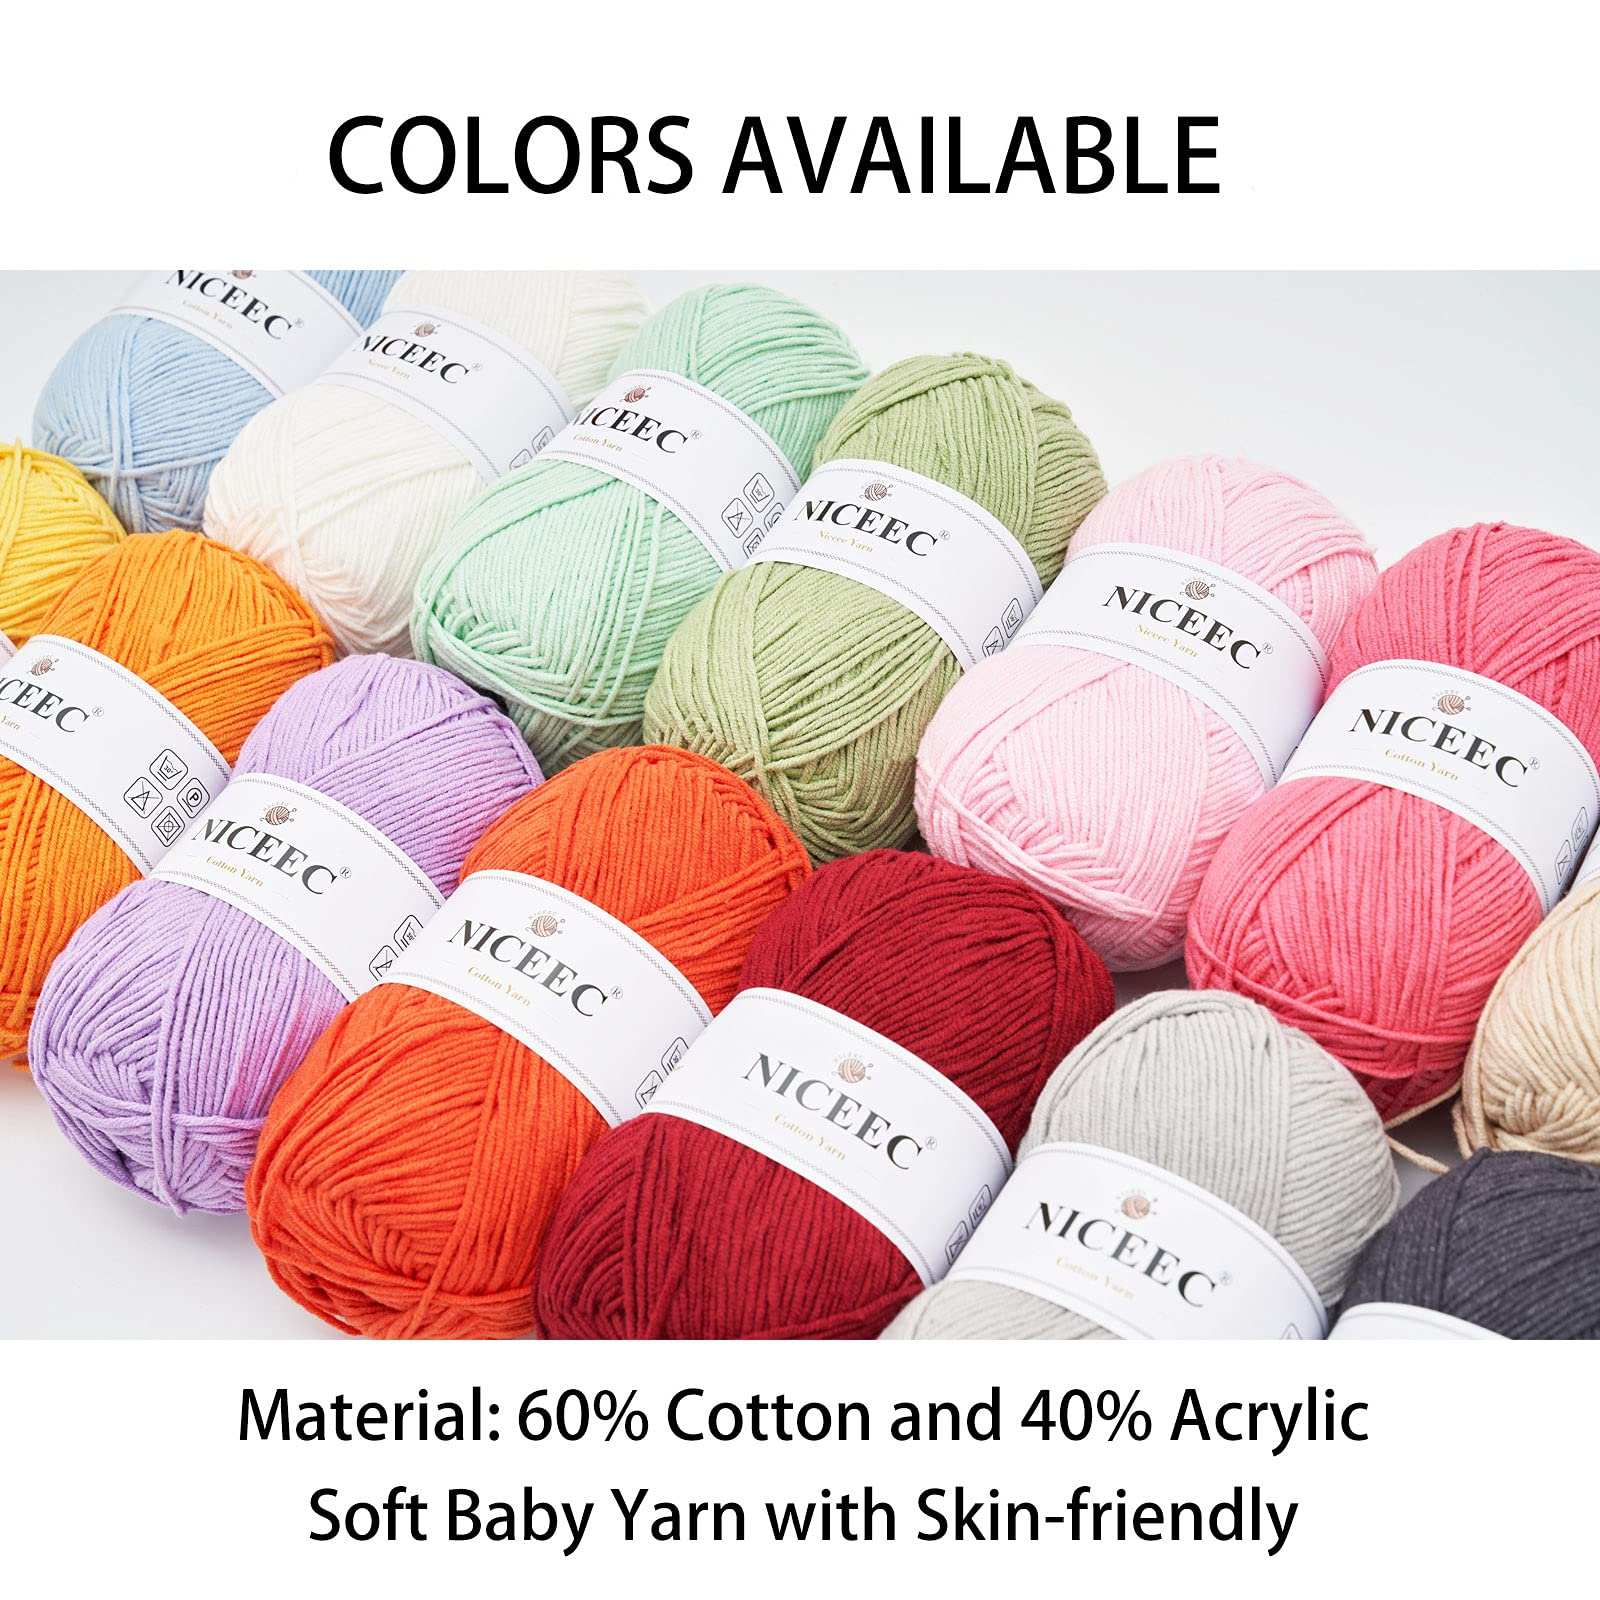 Niceec 3 Skeins Soft Baby Cotton Yarn Warm 5 Ply Yarn for Knitting Crochet  Total Length 3220m3240 Yds,100g3 